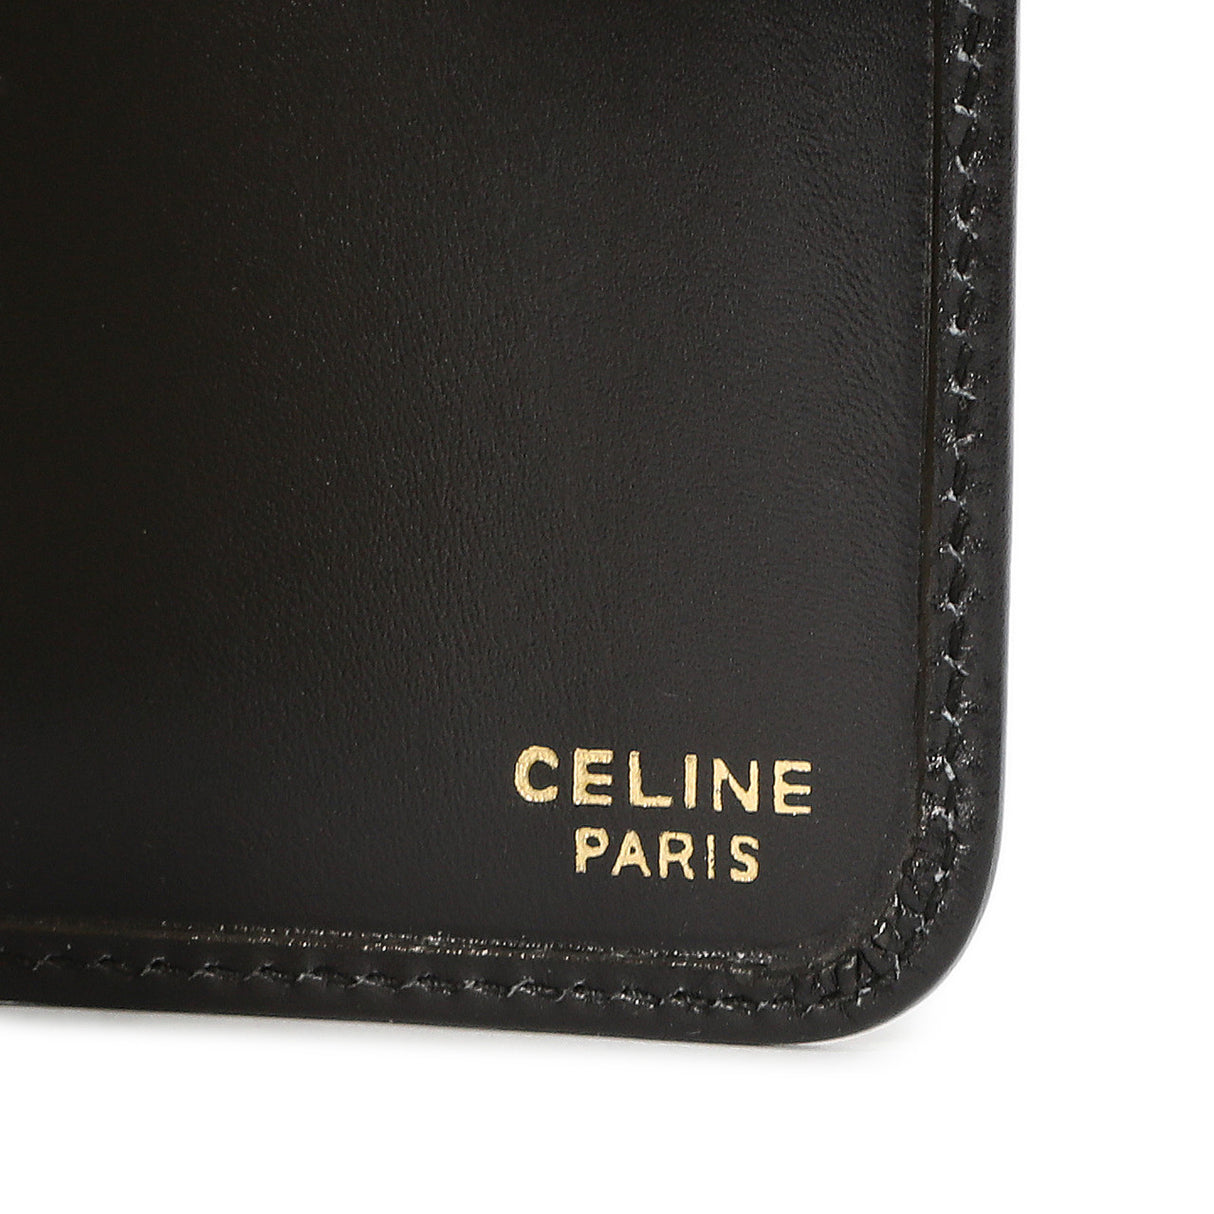 Celine Black Box Leather Agenda Cover